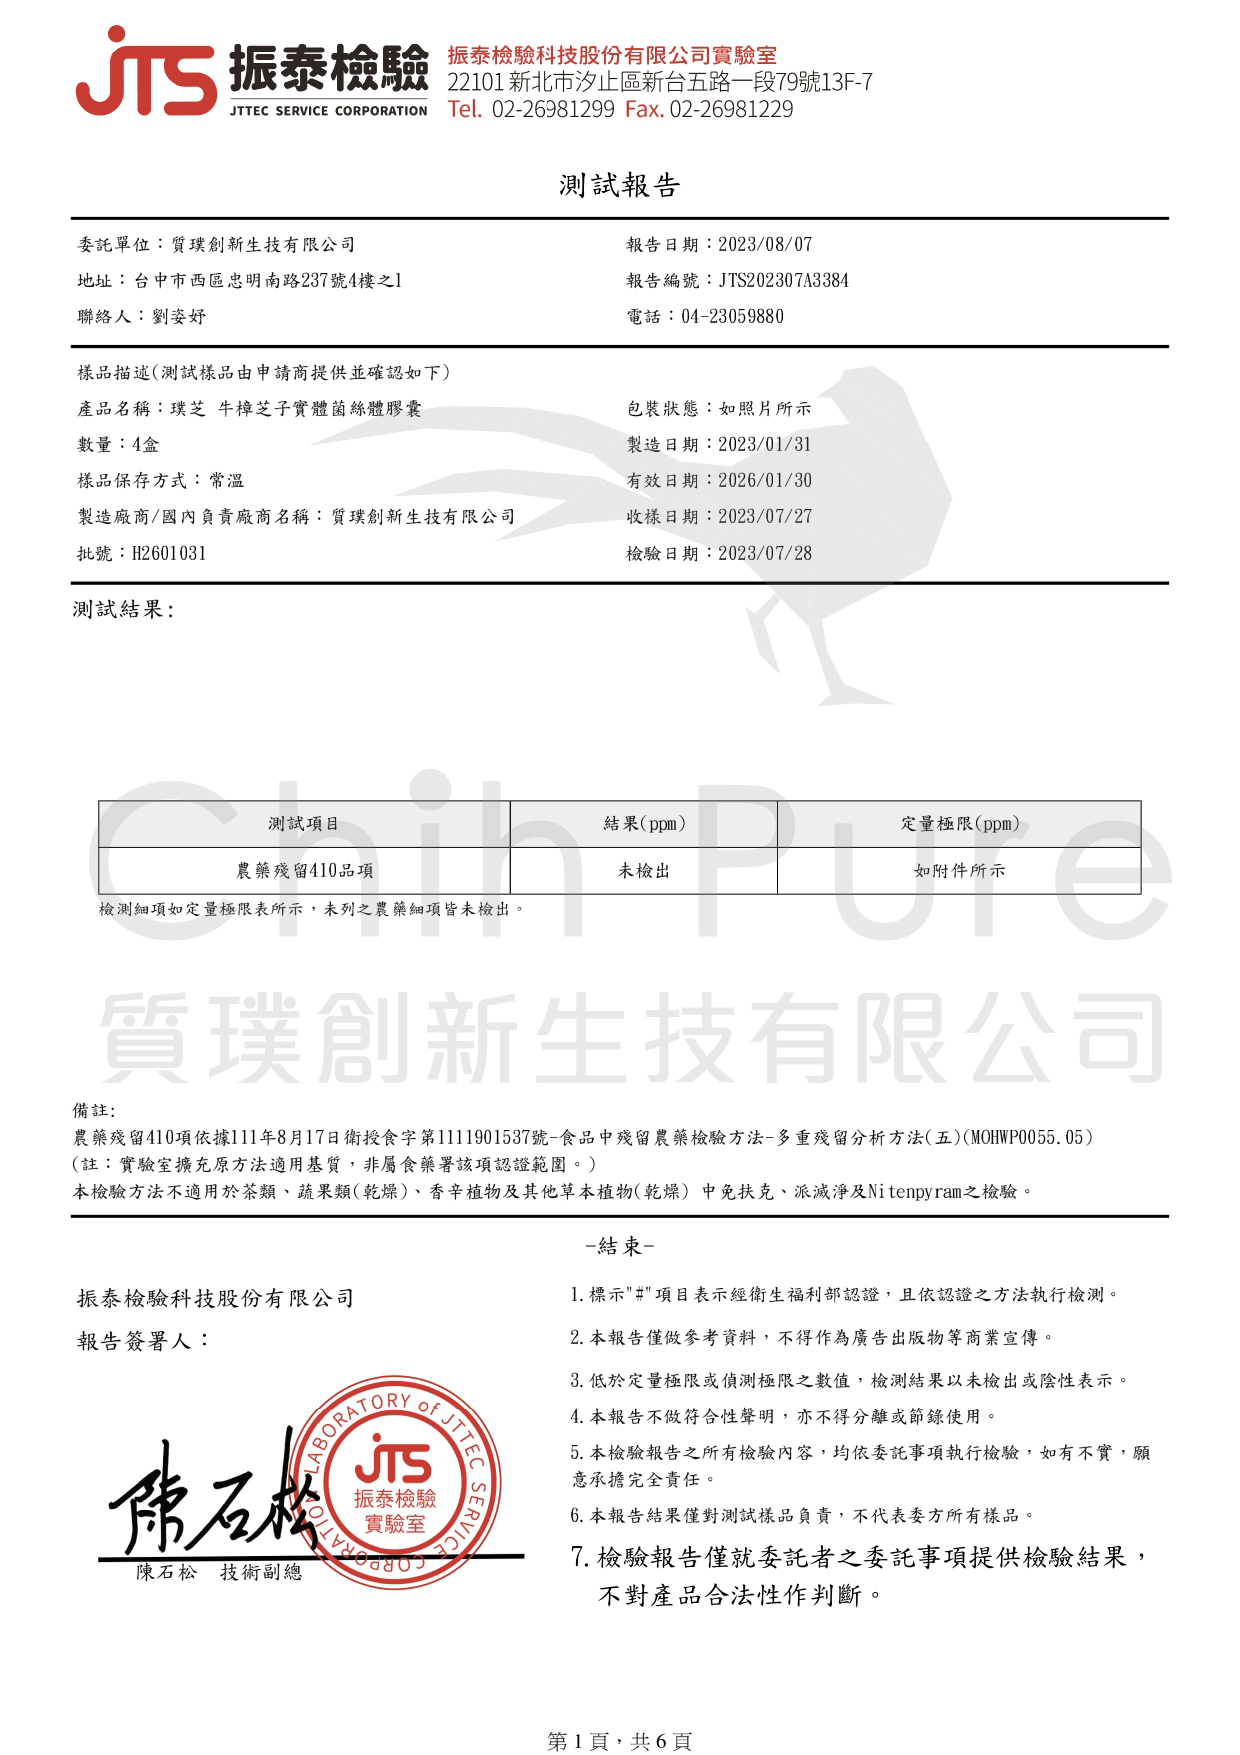 農藥JTS202307A3384(中文)_page-0001 (2)